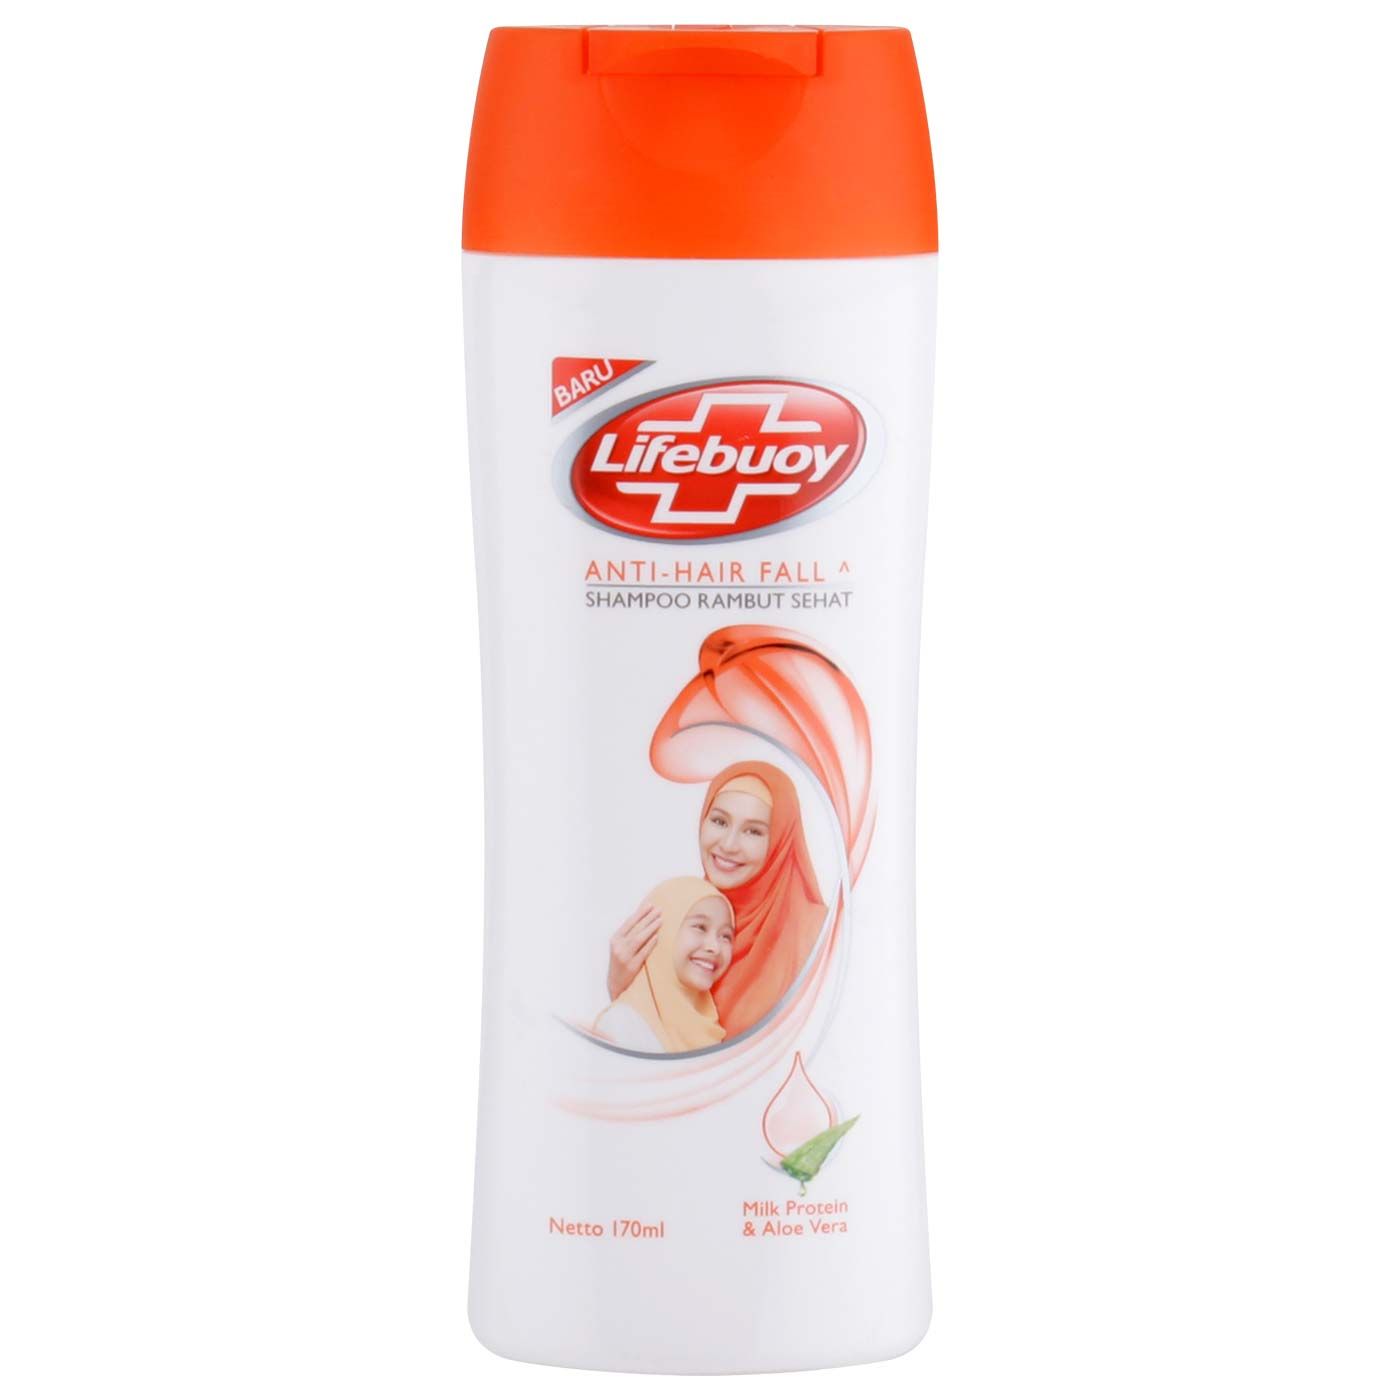 Lifebuoy Shampoo Anti Hairfall Fx 170ml - 1